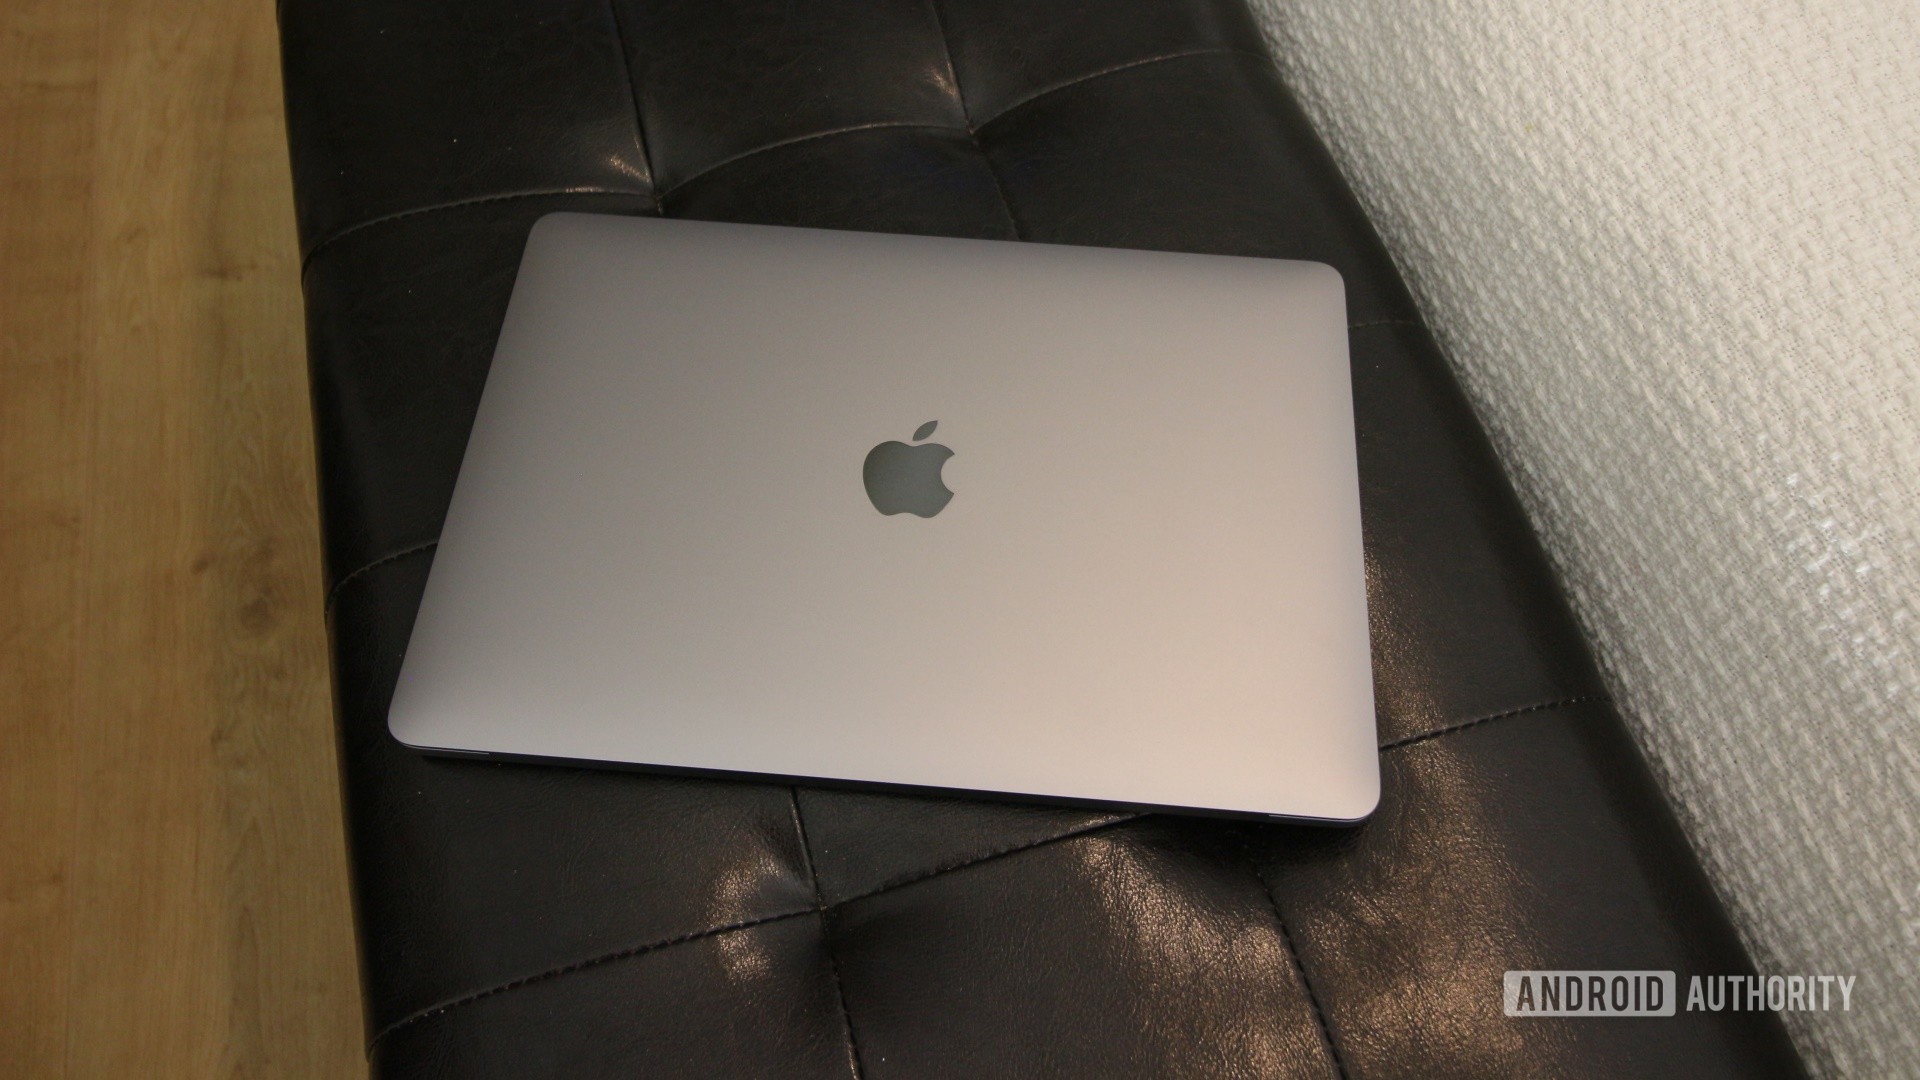 Apple MacBook Air M1 closed on black footrest